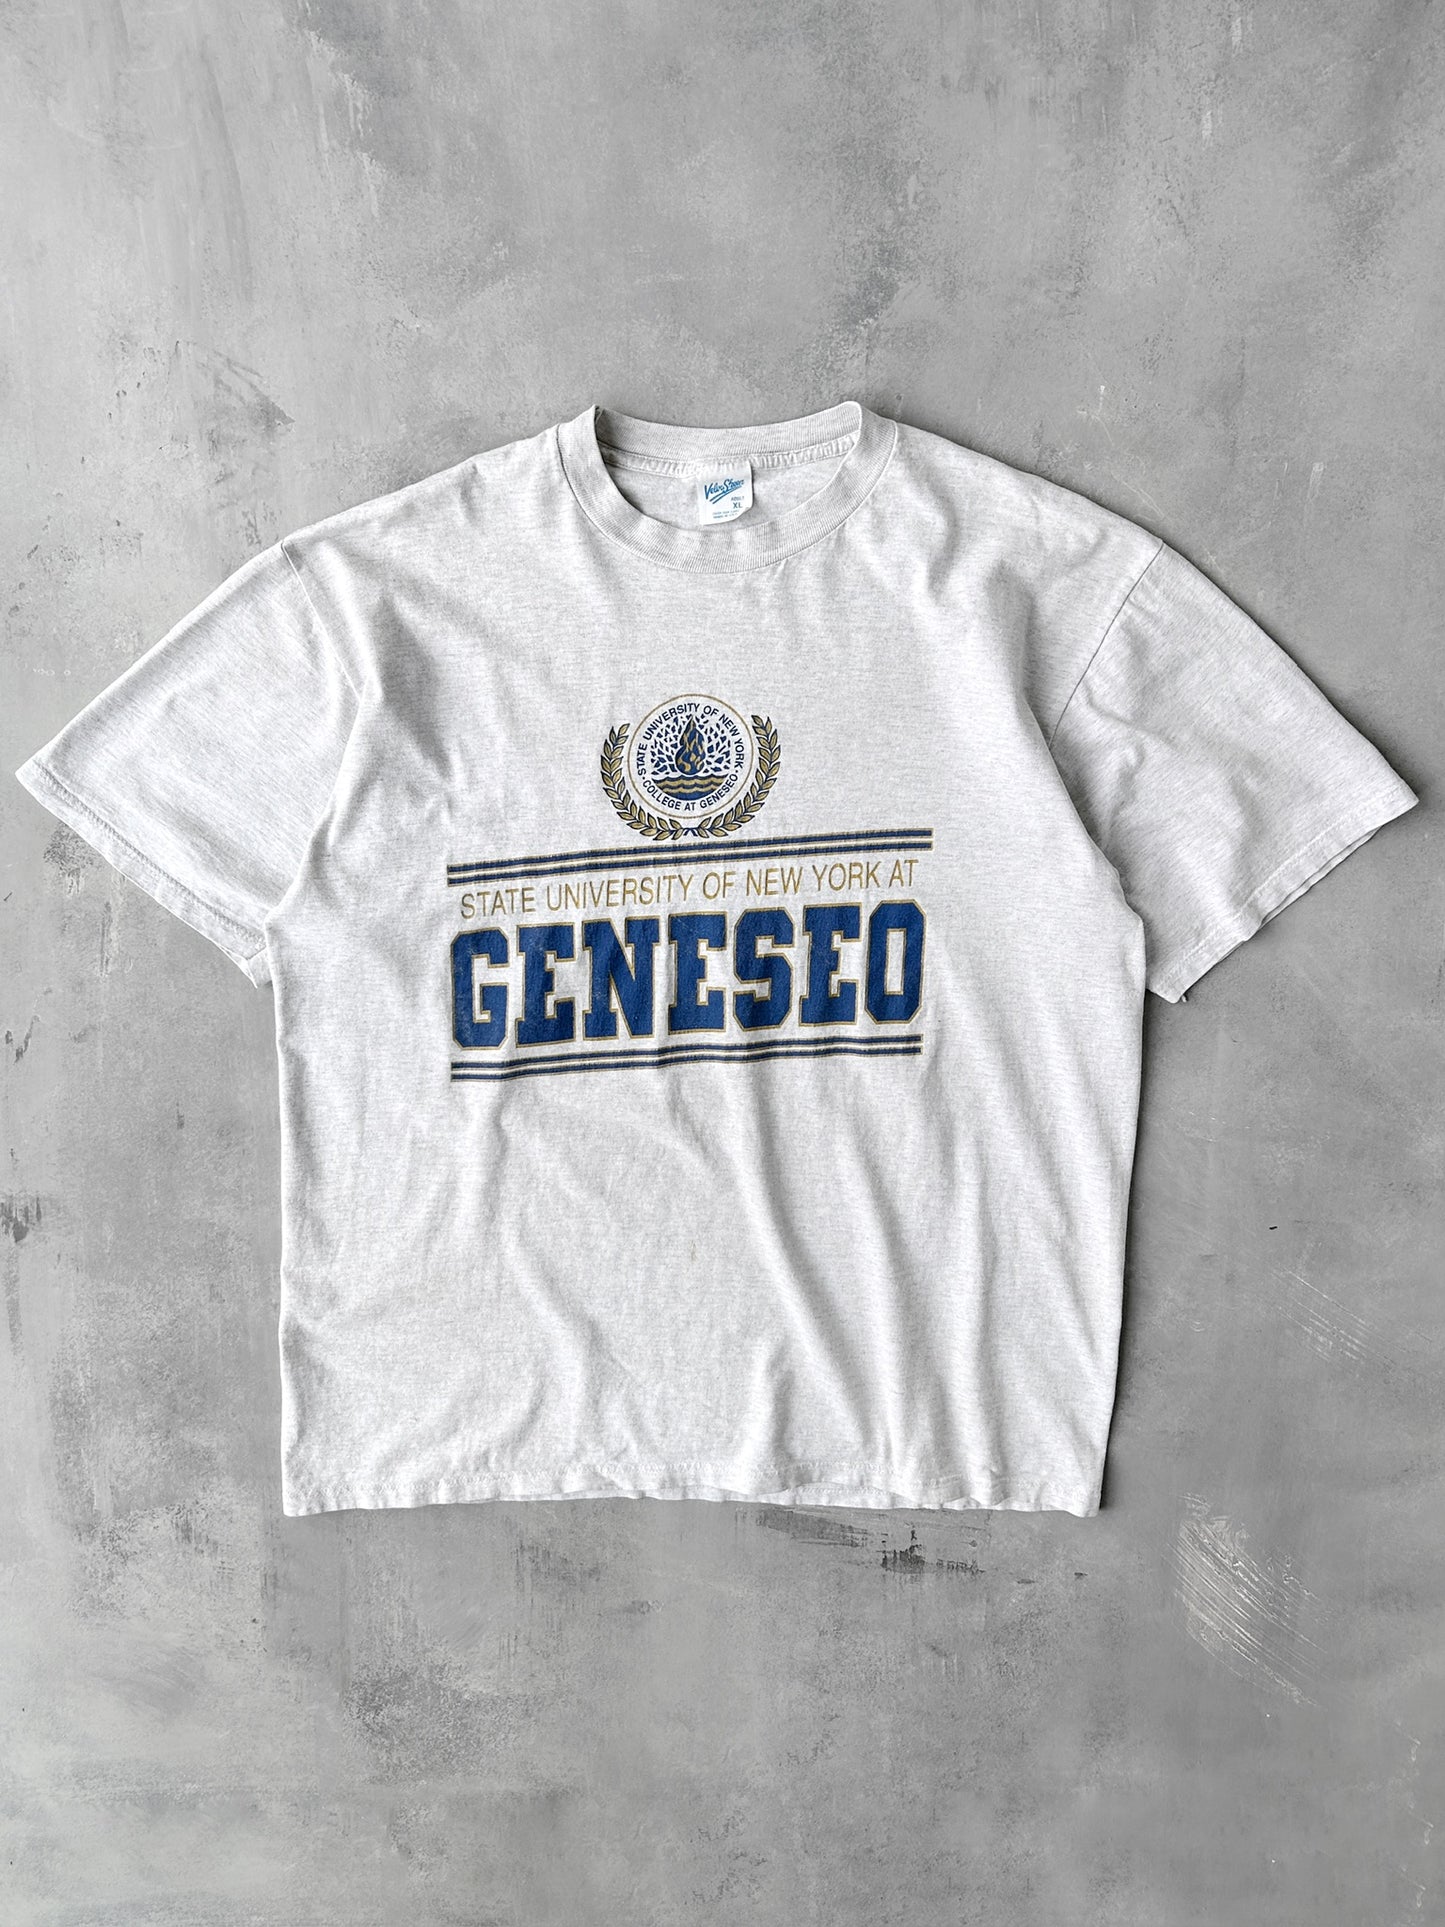 SUNY Geneseo T-Shirt 90's - XL